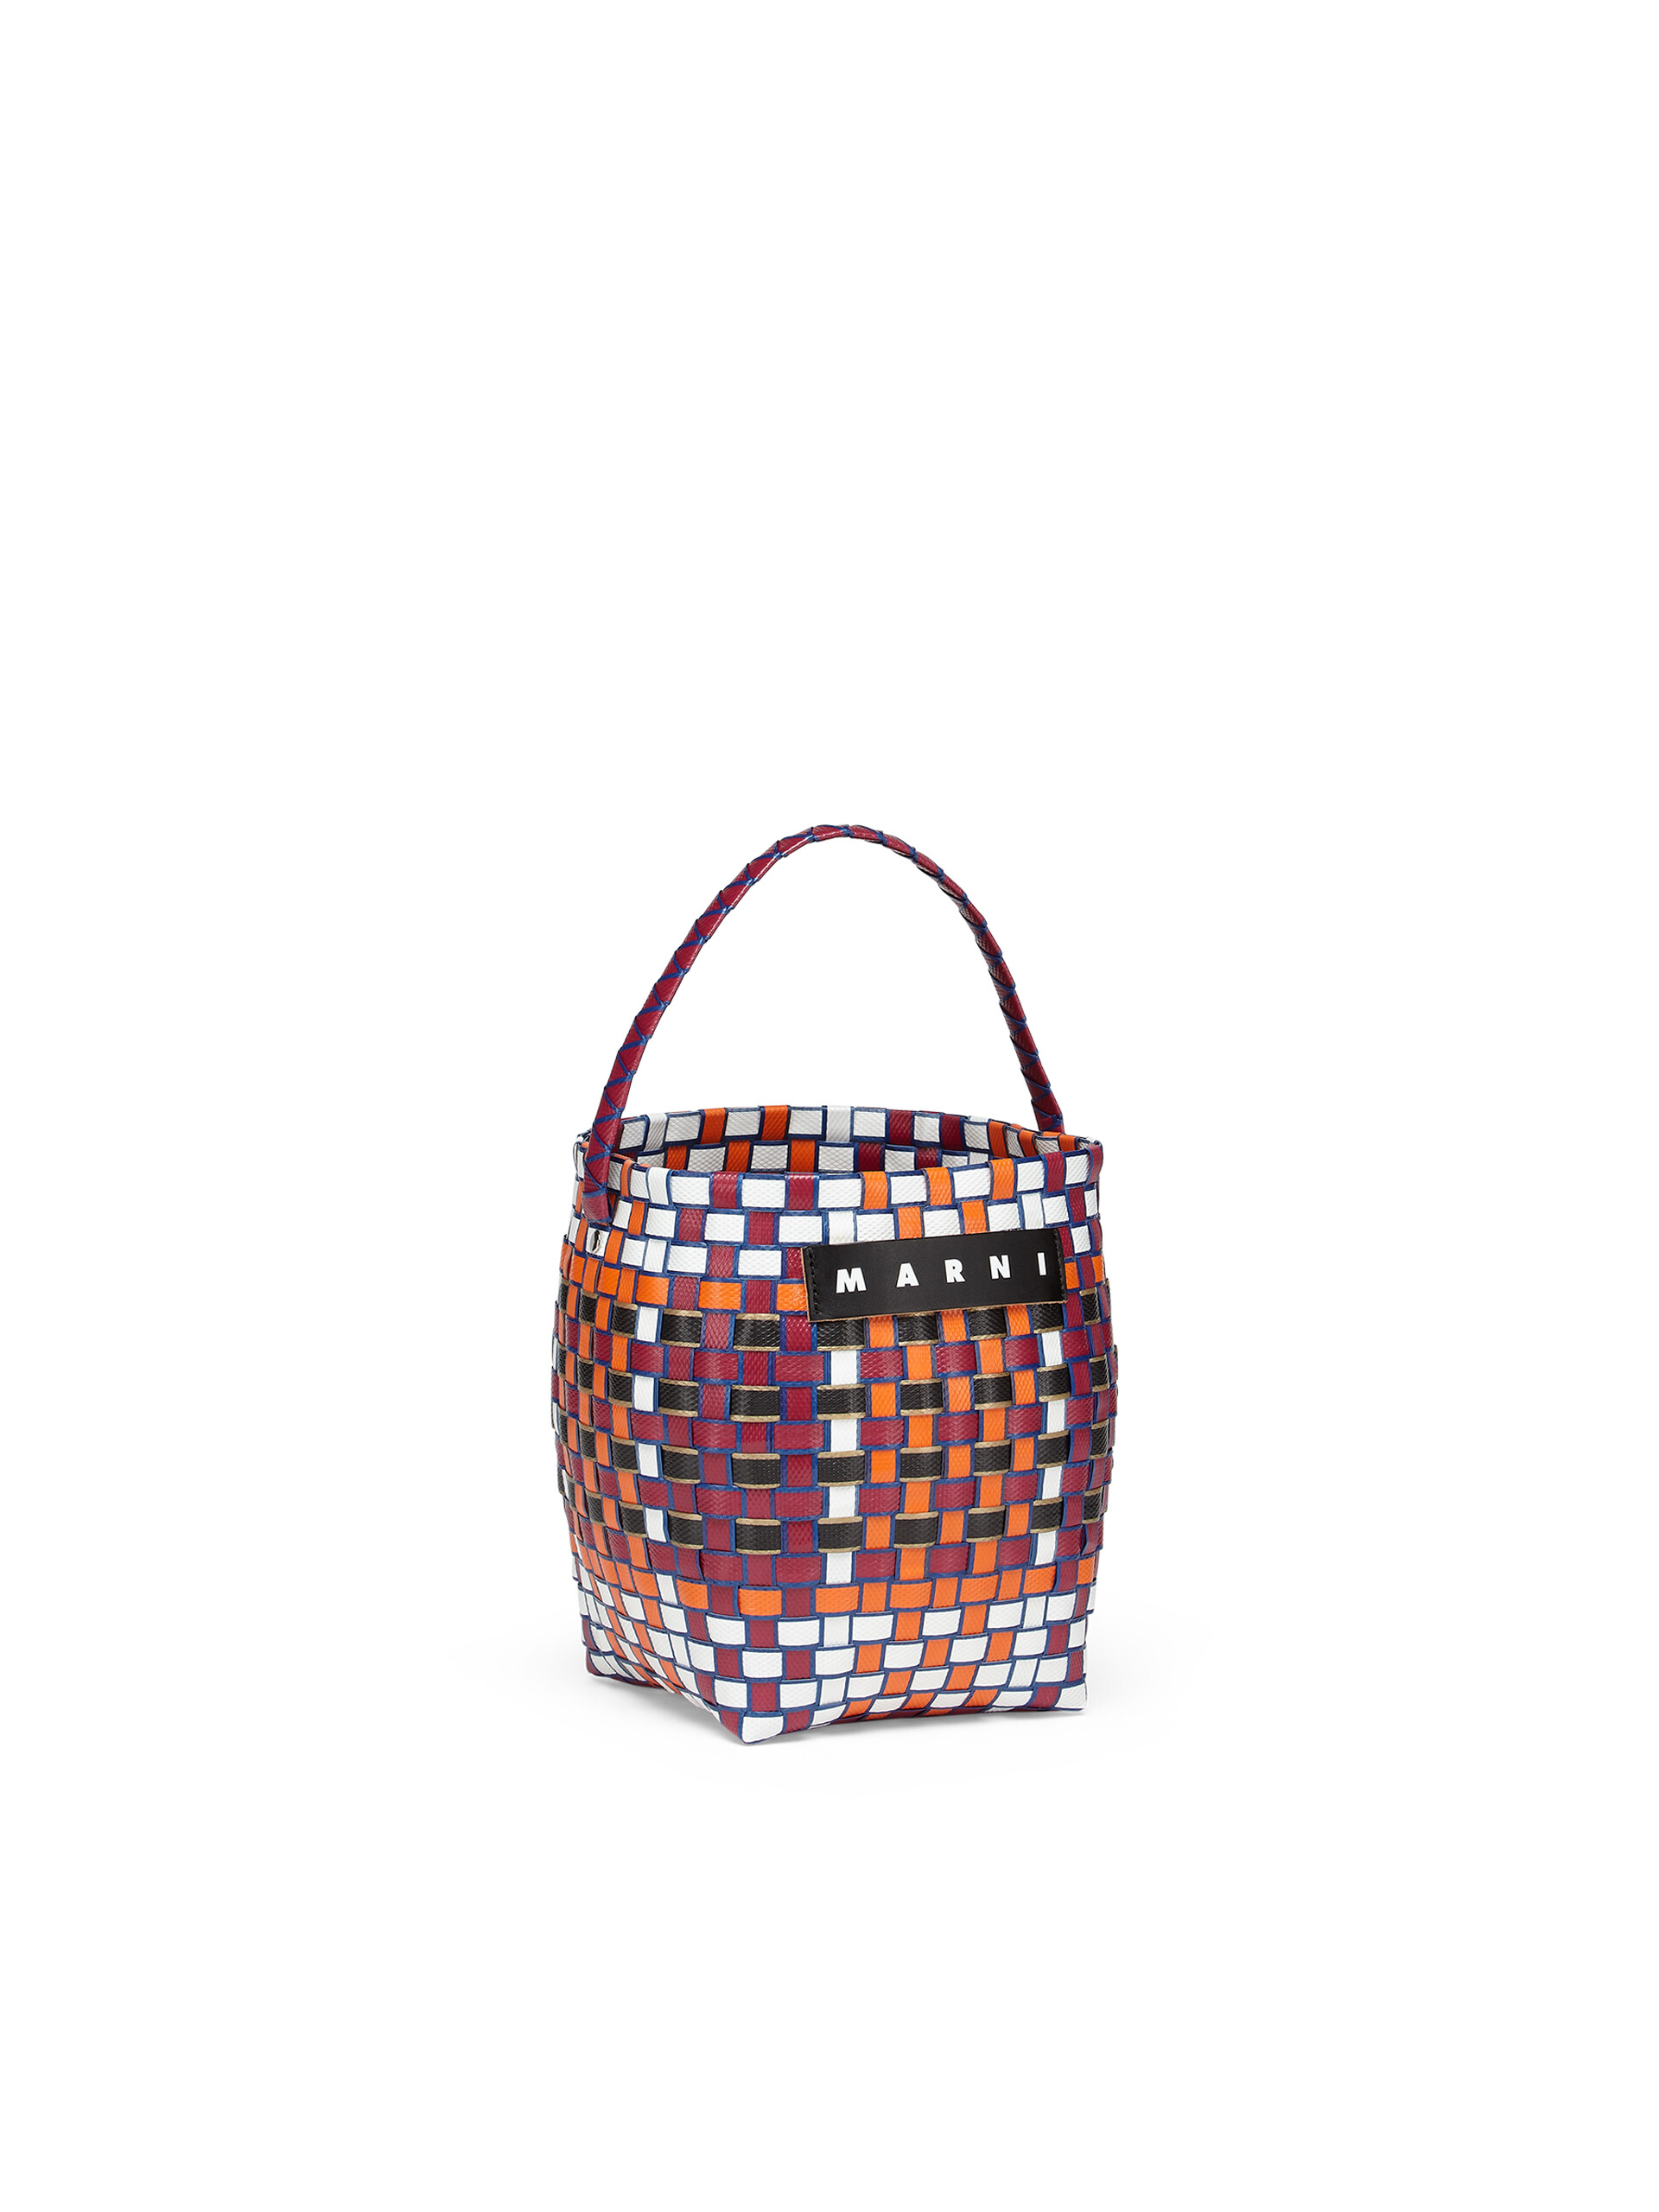 MARNI MARKET POD BASKET bag in orange woven material - Shopping Bags - Image 2